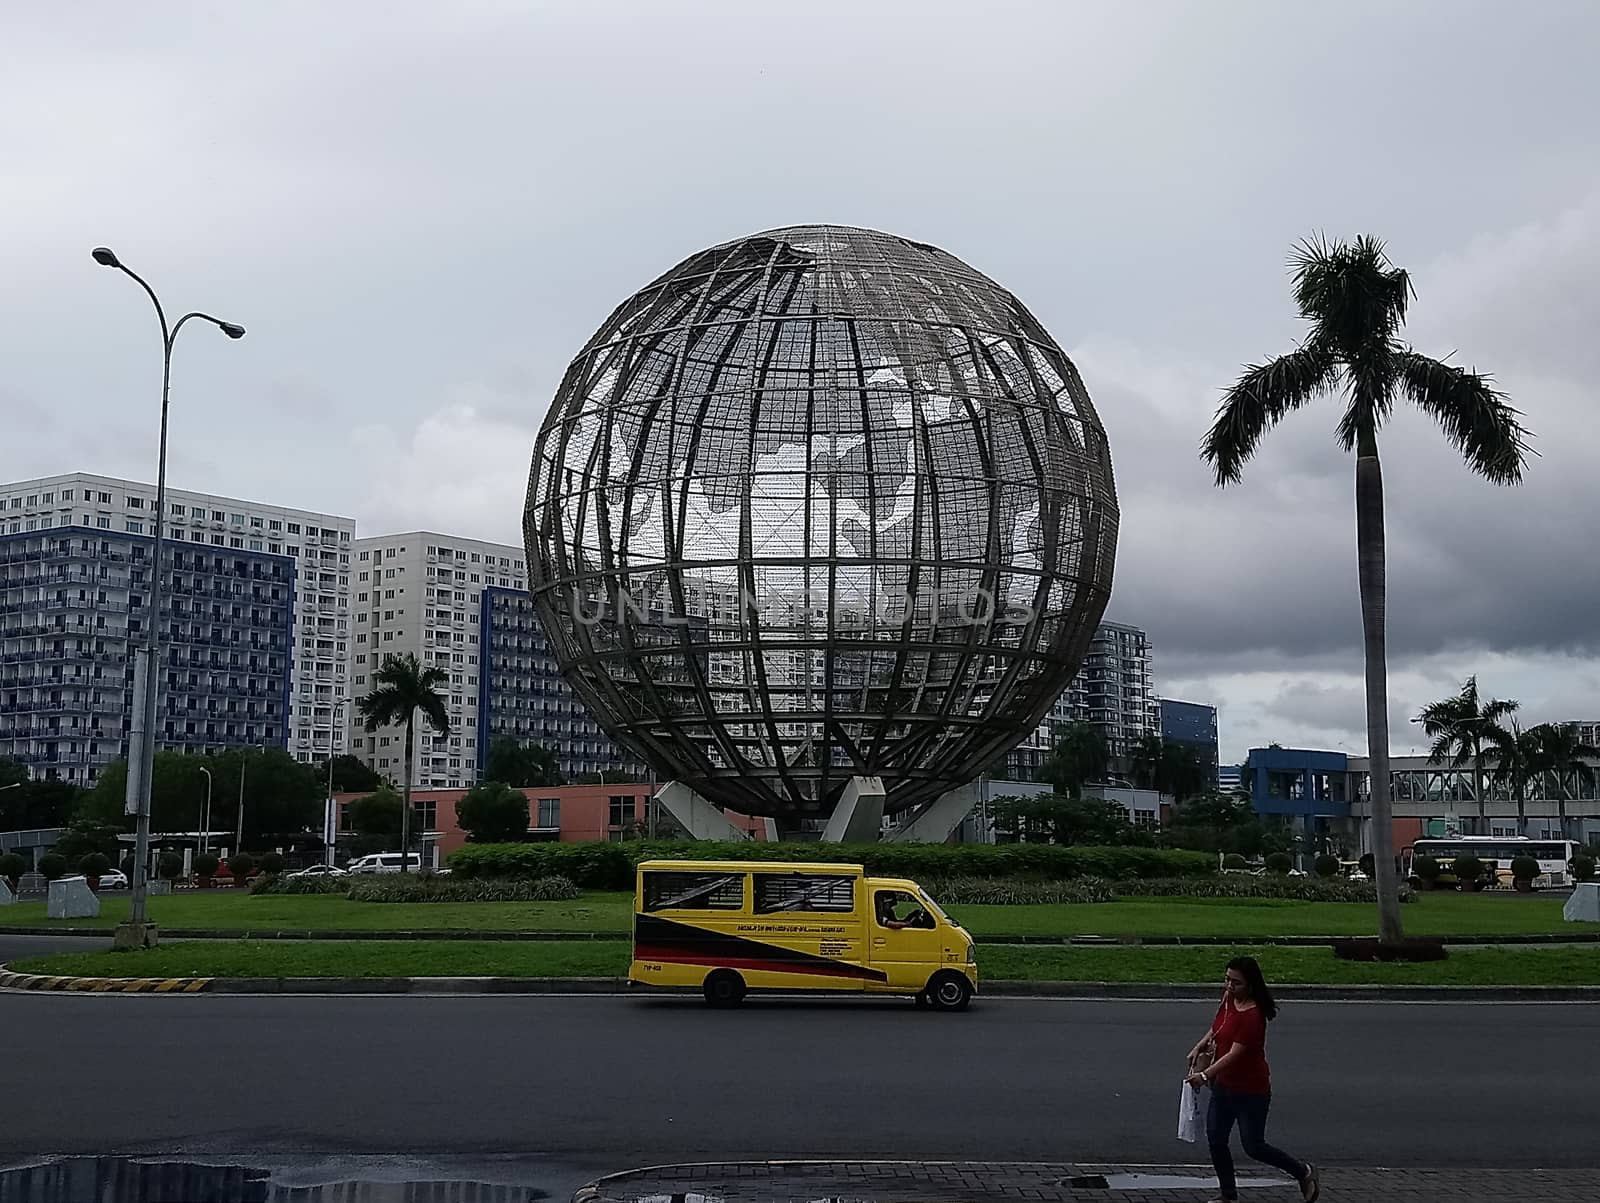 SM mall of asia globe rotunda in Pasay, Philippines by imwaltersy